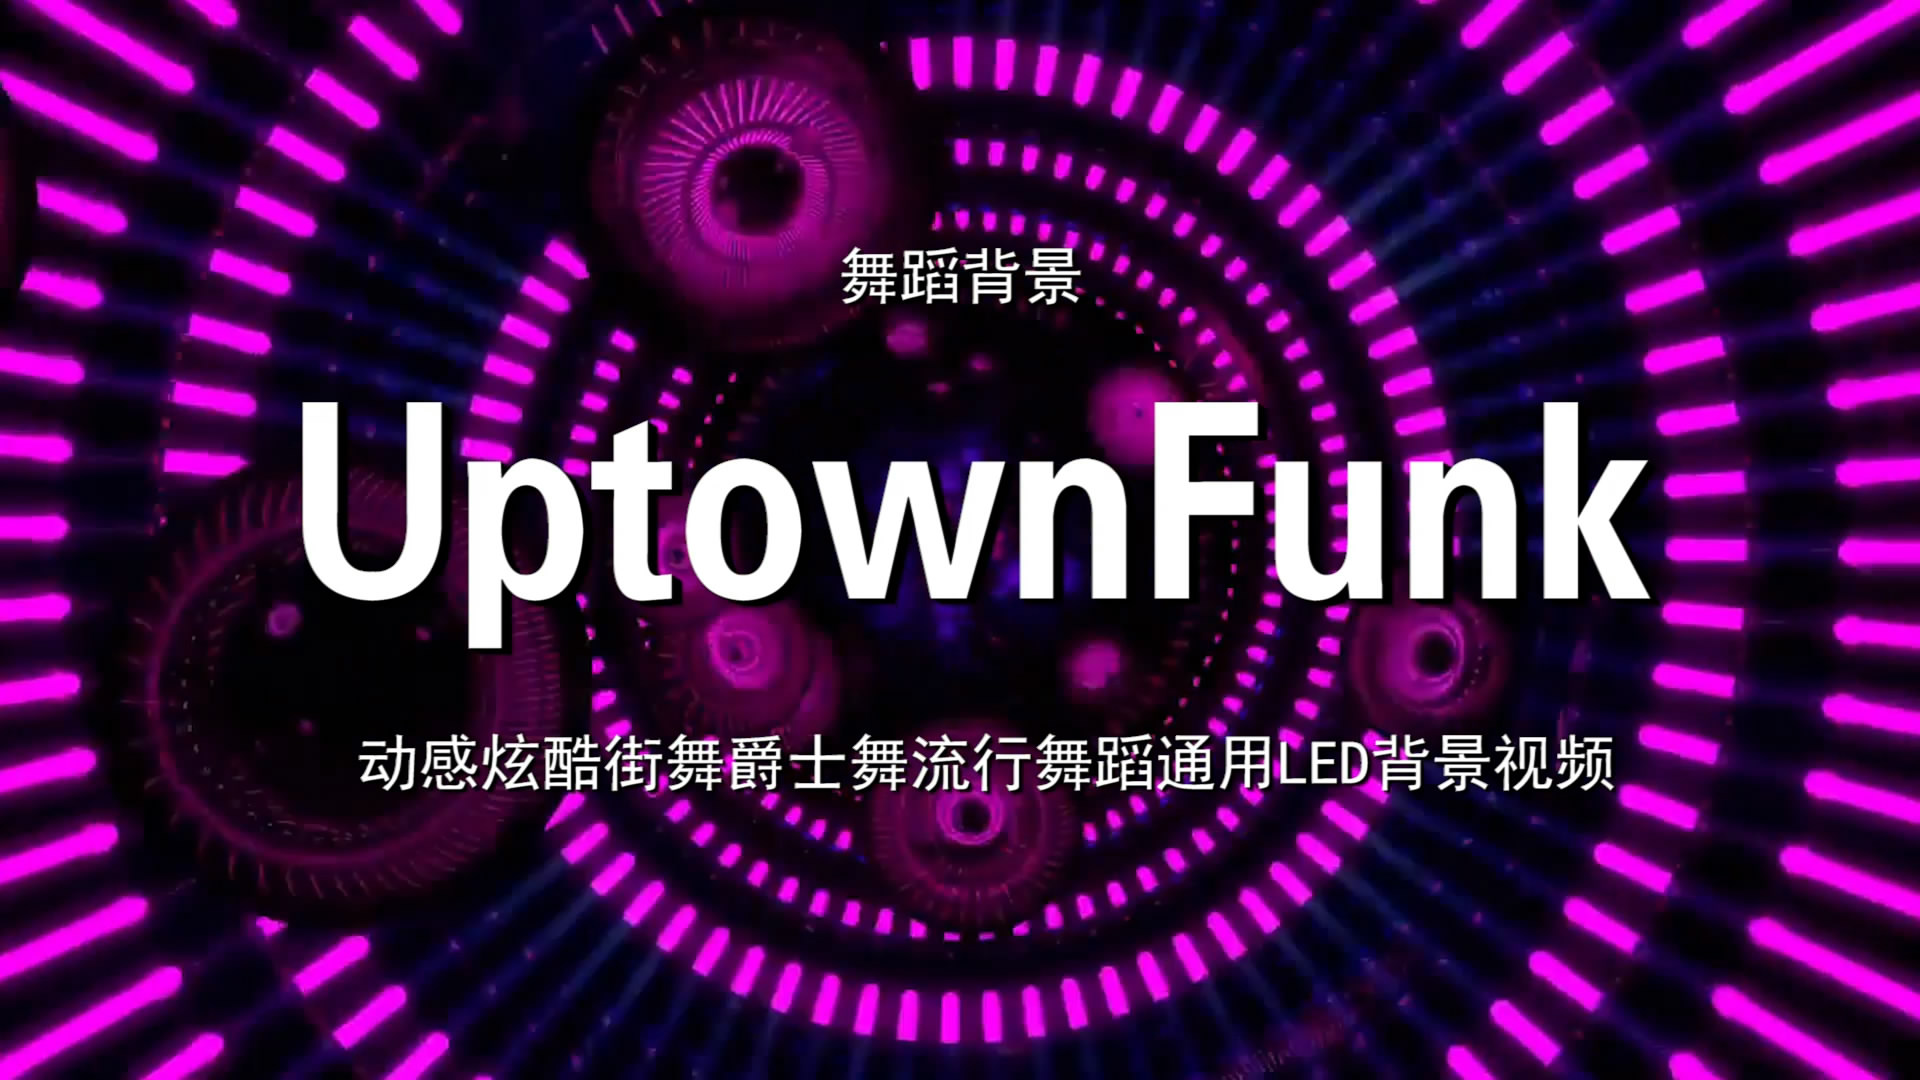 UptownFunk 动感炫酷街舞流行歌舞LED背景大屏幕视频素材TV